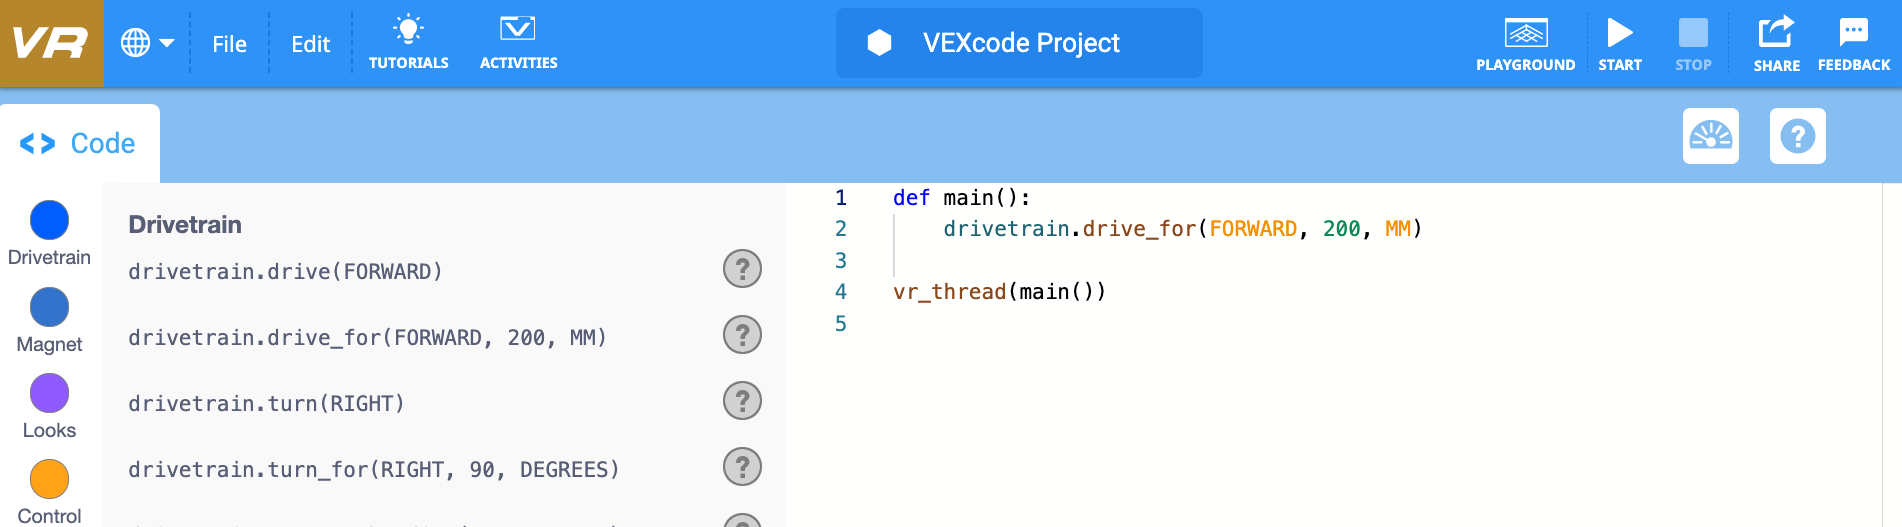 VEXcode VR Python Mode